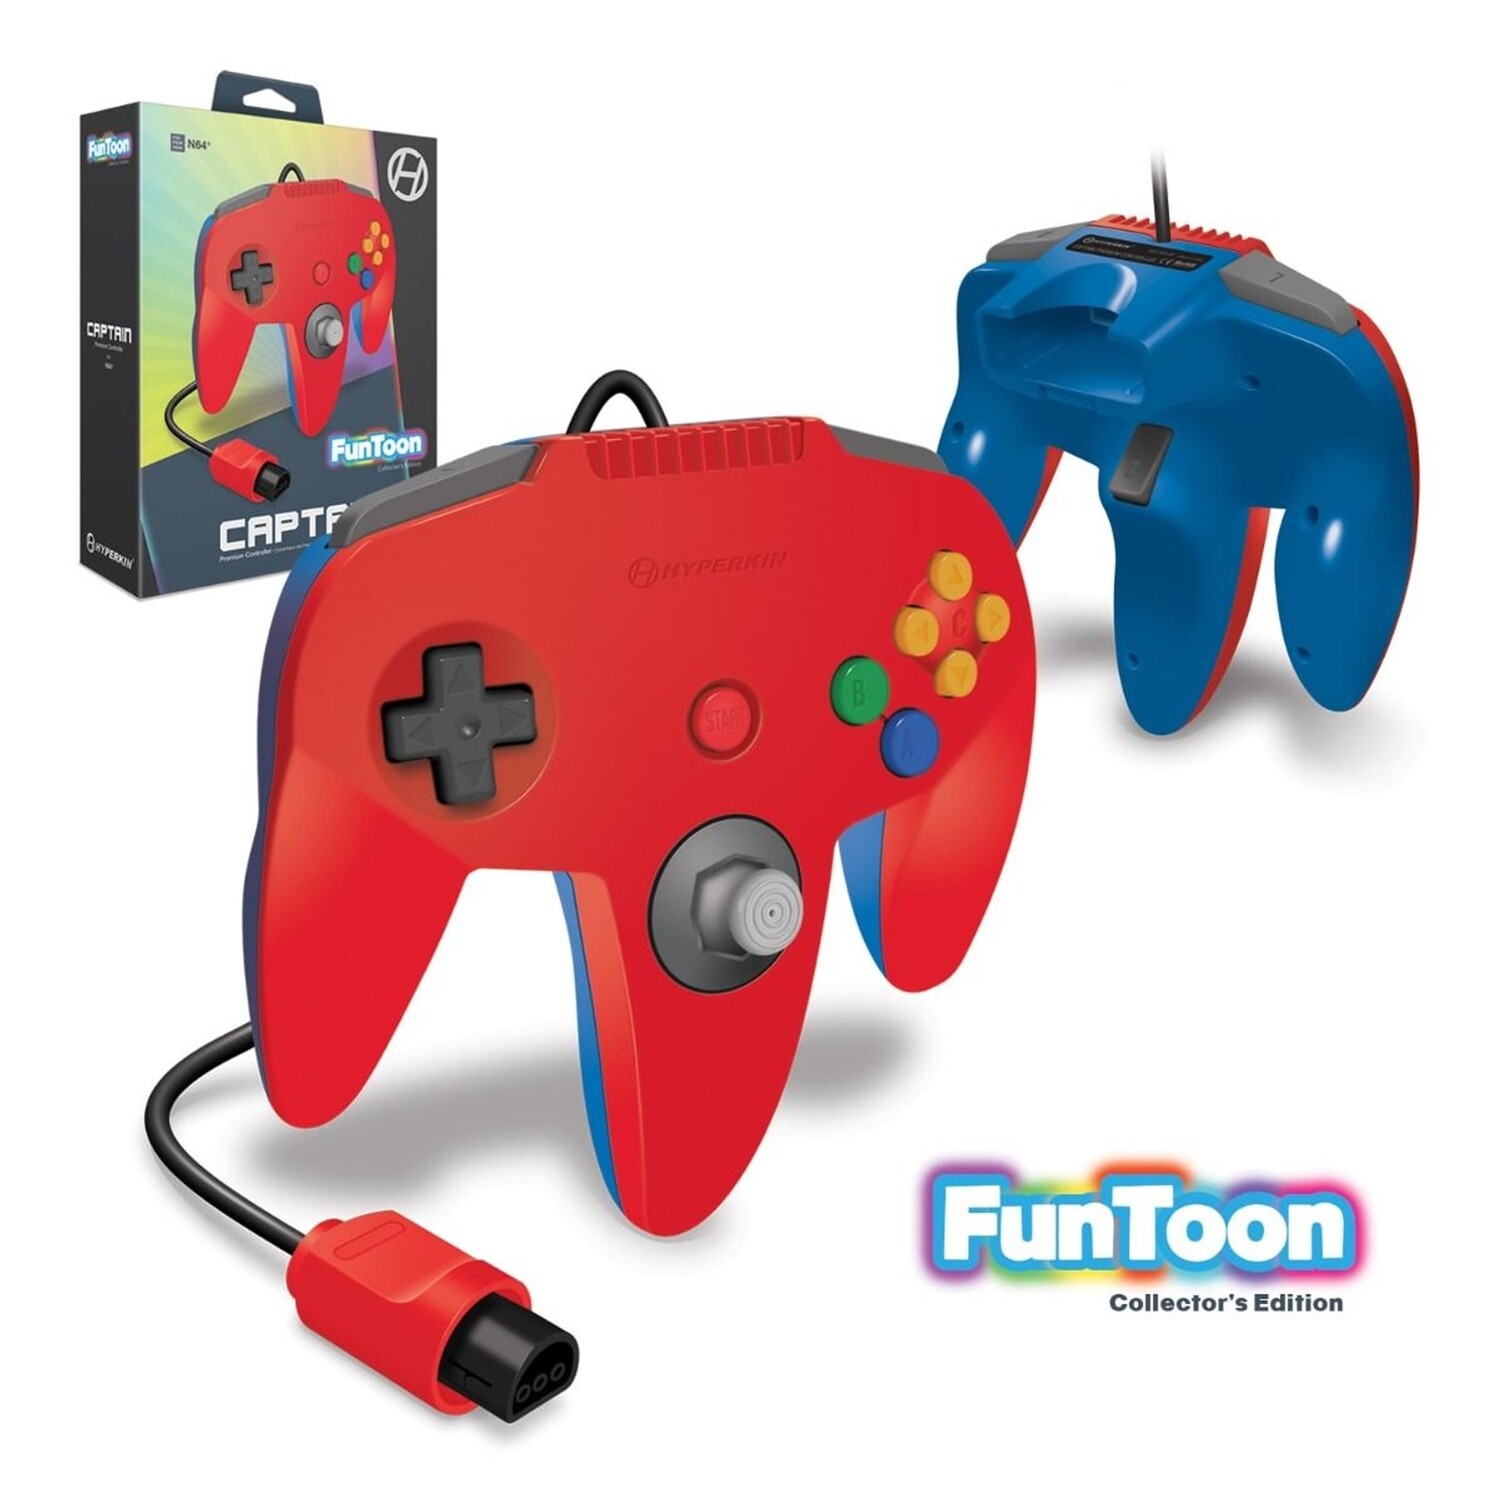 Hyperkin Captain Premium Controller FunToon Collector's Edition (Hero Red)